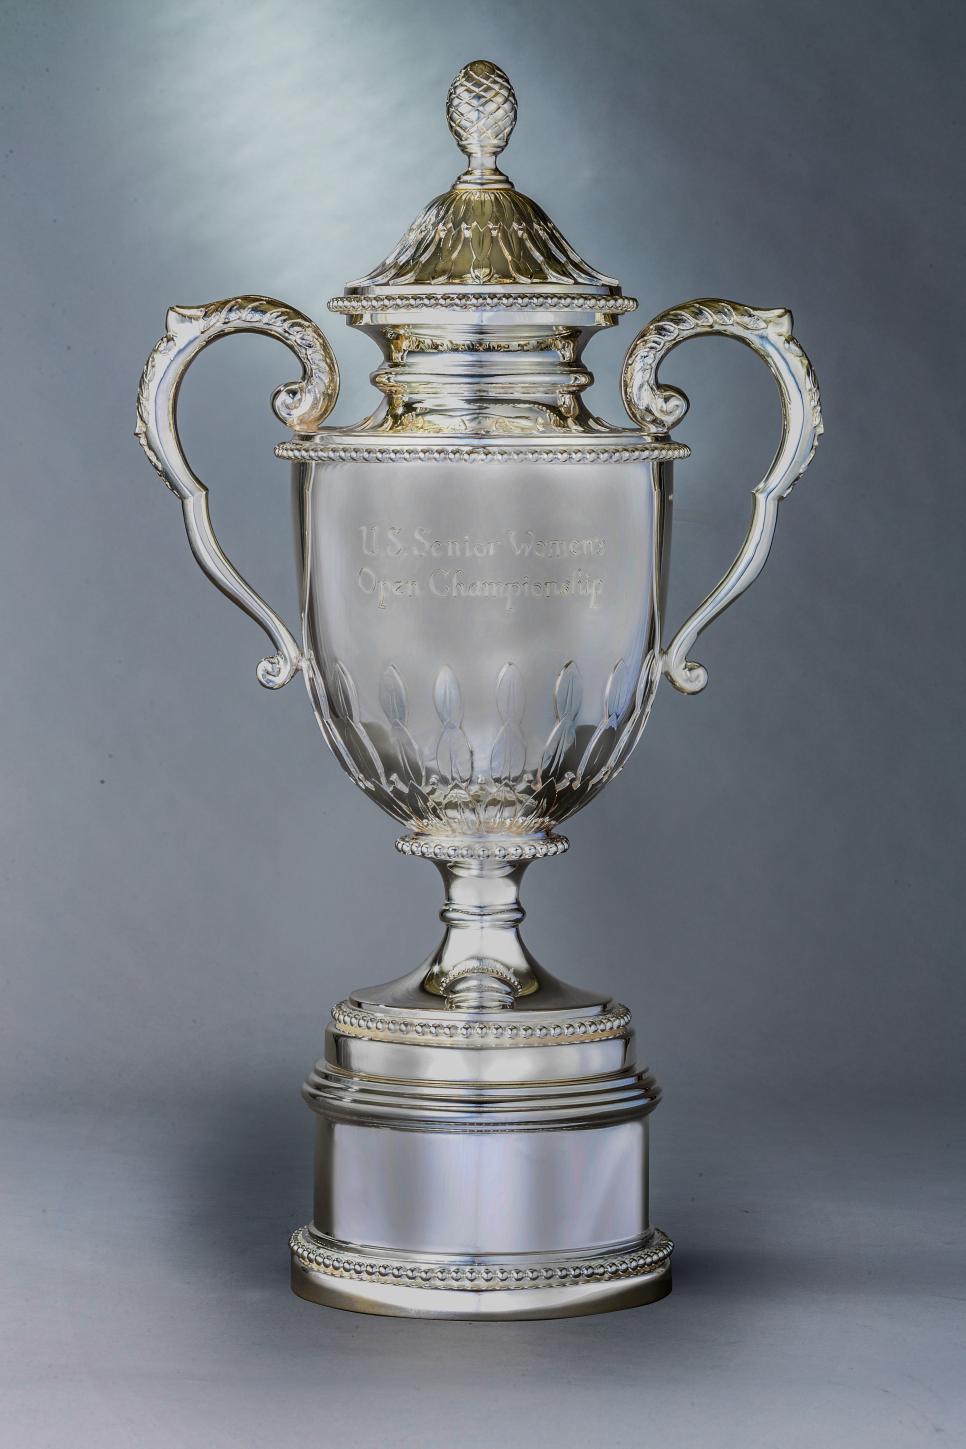 U.S. Senior Women's Open Championship Trophy